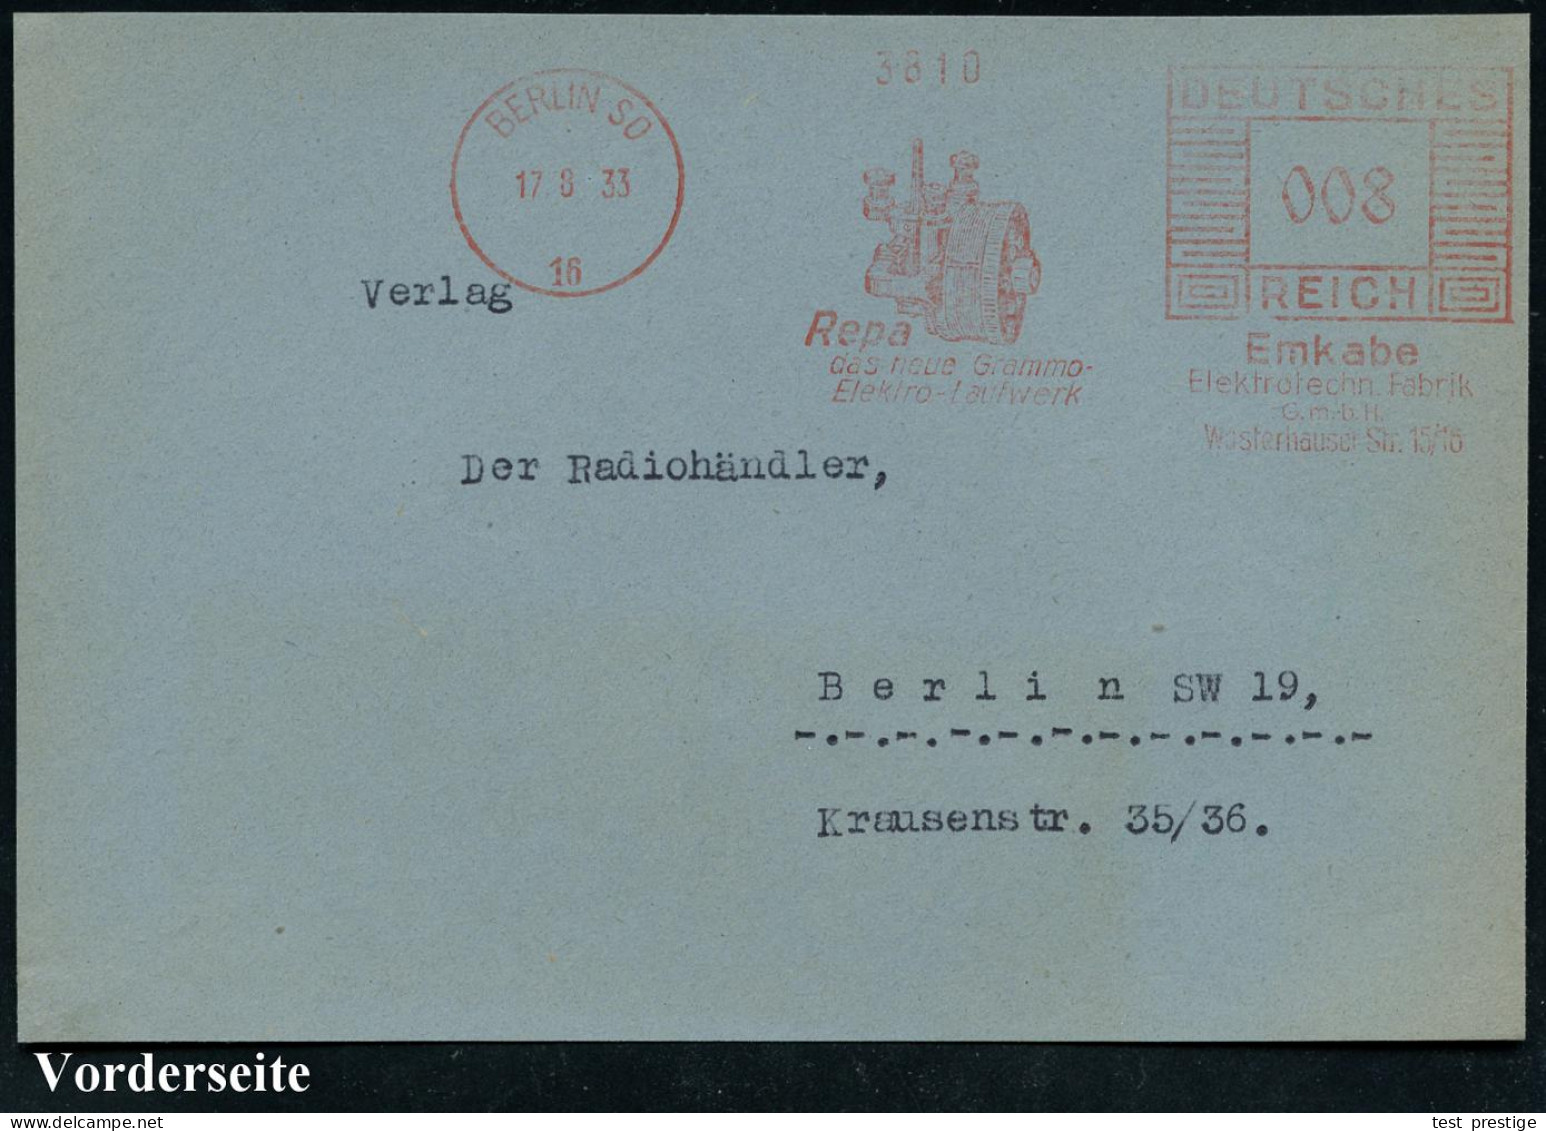 BERLIN SO/ 16/ Repa/ Das Neue Grammo-/ Elektro-Laufwerk/ Emkabe.. 1933 (17.8.) AFS Francotyp (= Grammofon-Laufwerk) Beda - Muziek